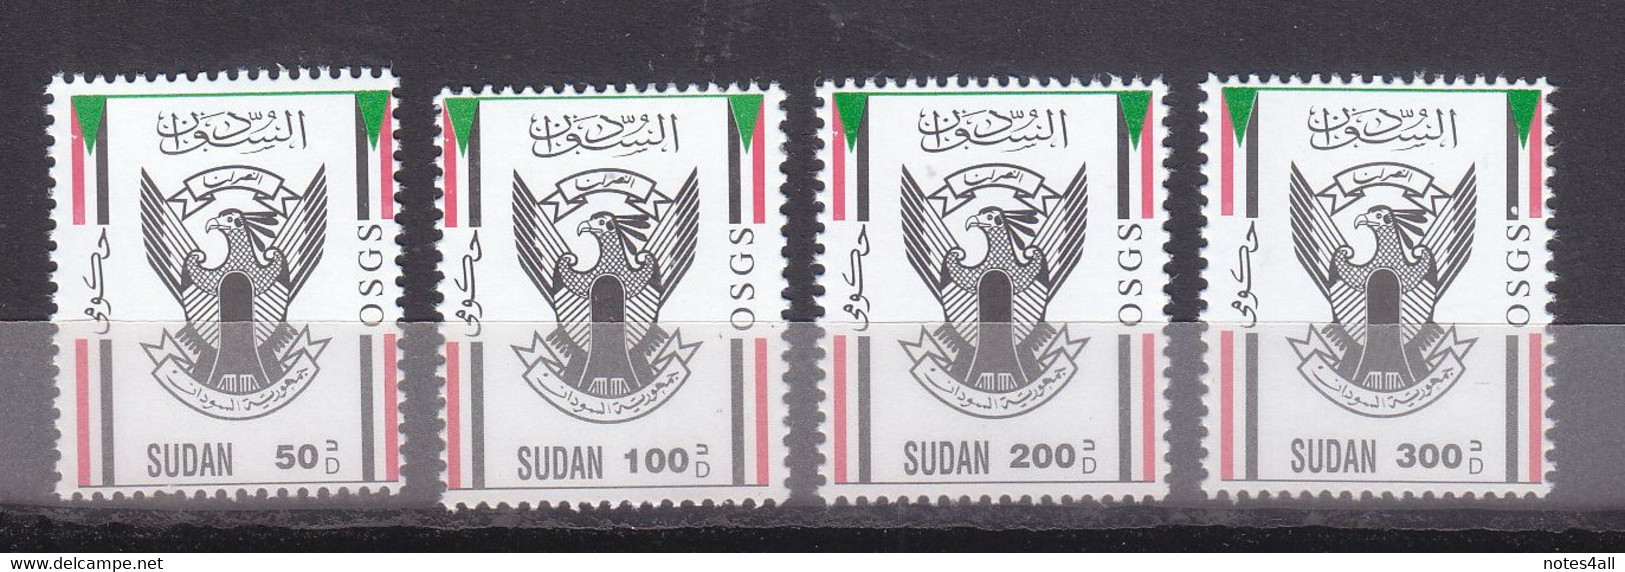 Stamps SUDAN 2003 SC O113 O116 OFFICIAL LOT X10 MNH SETS # 54 - Soedan (1954-...)